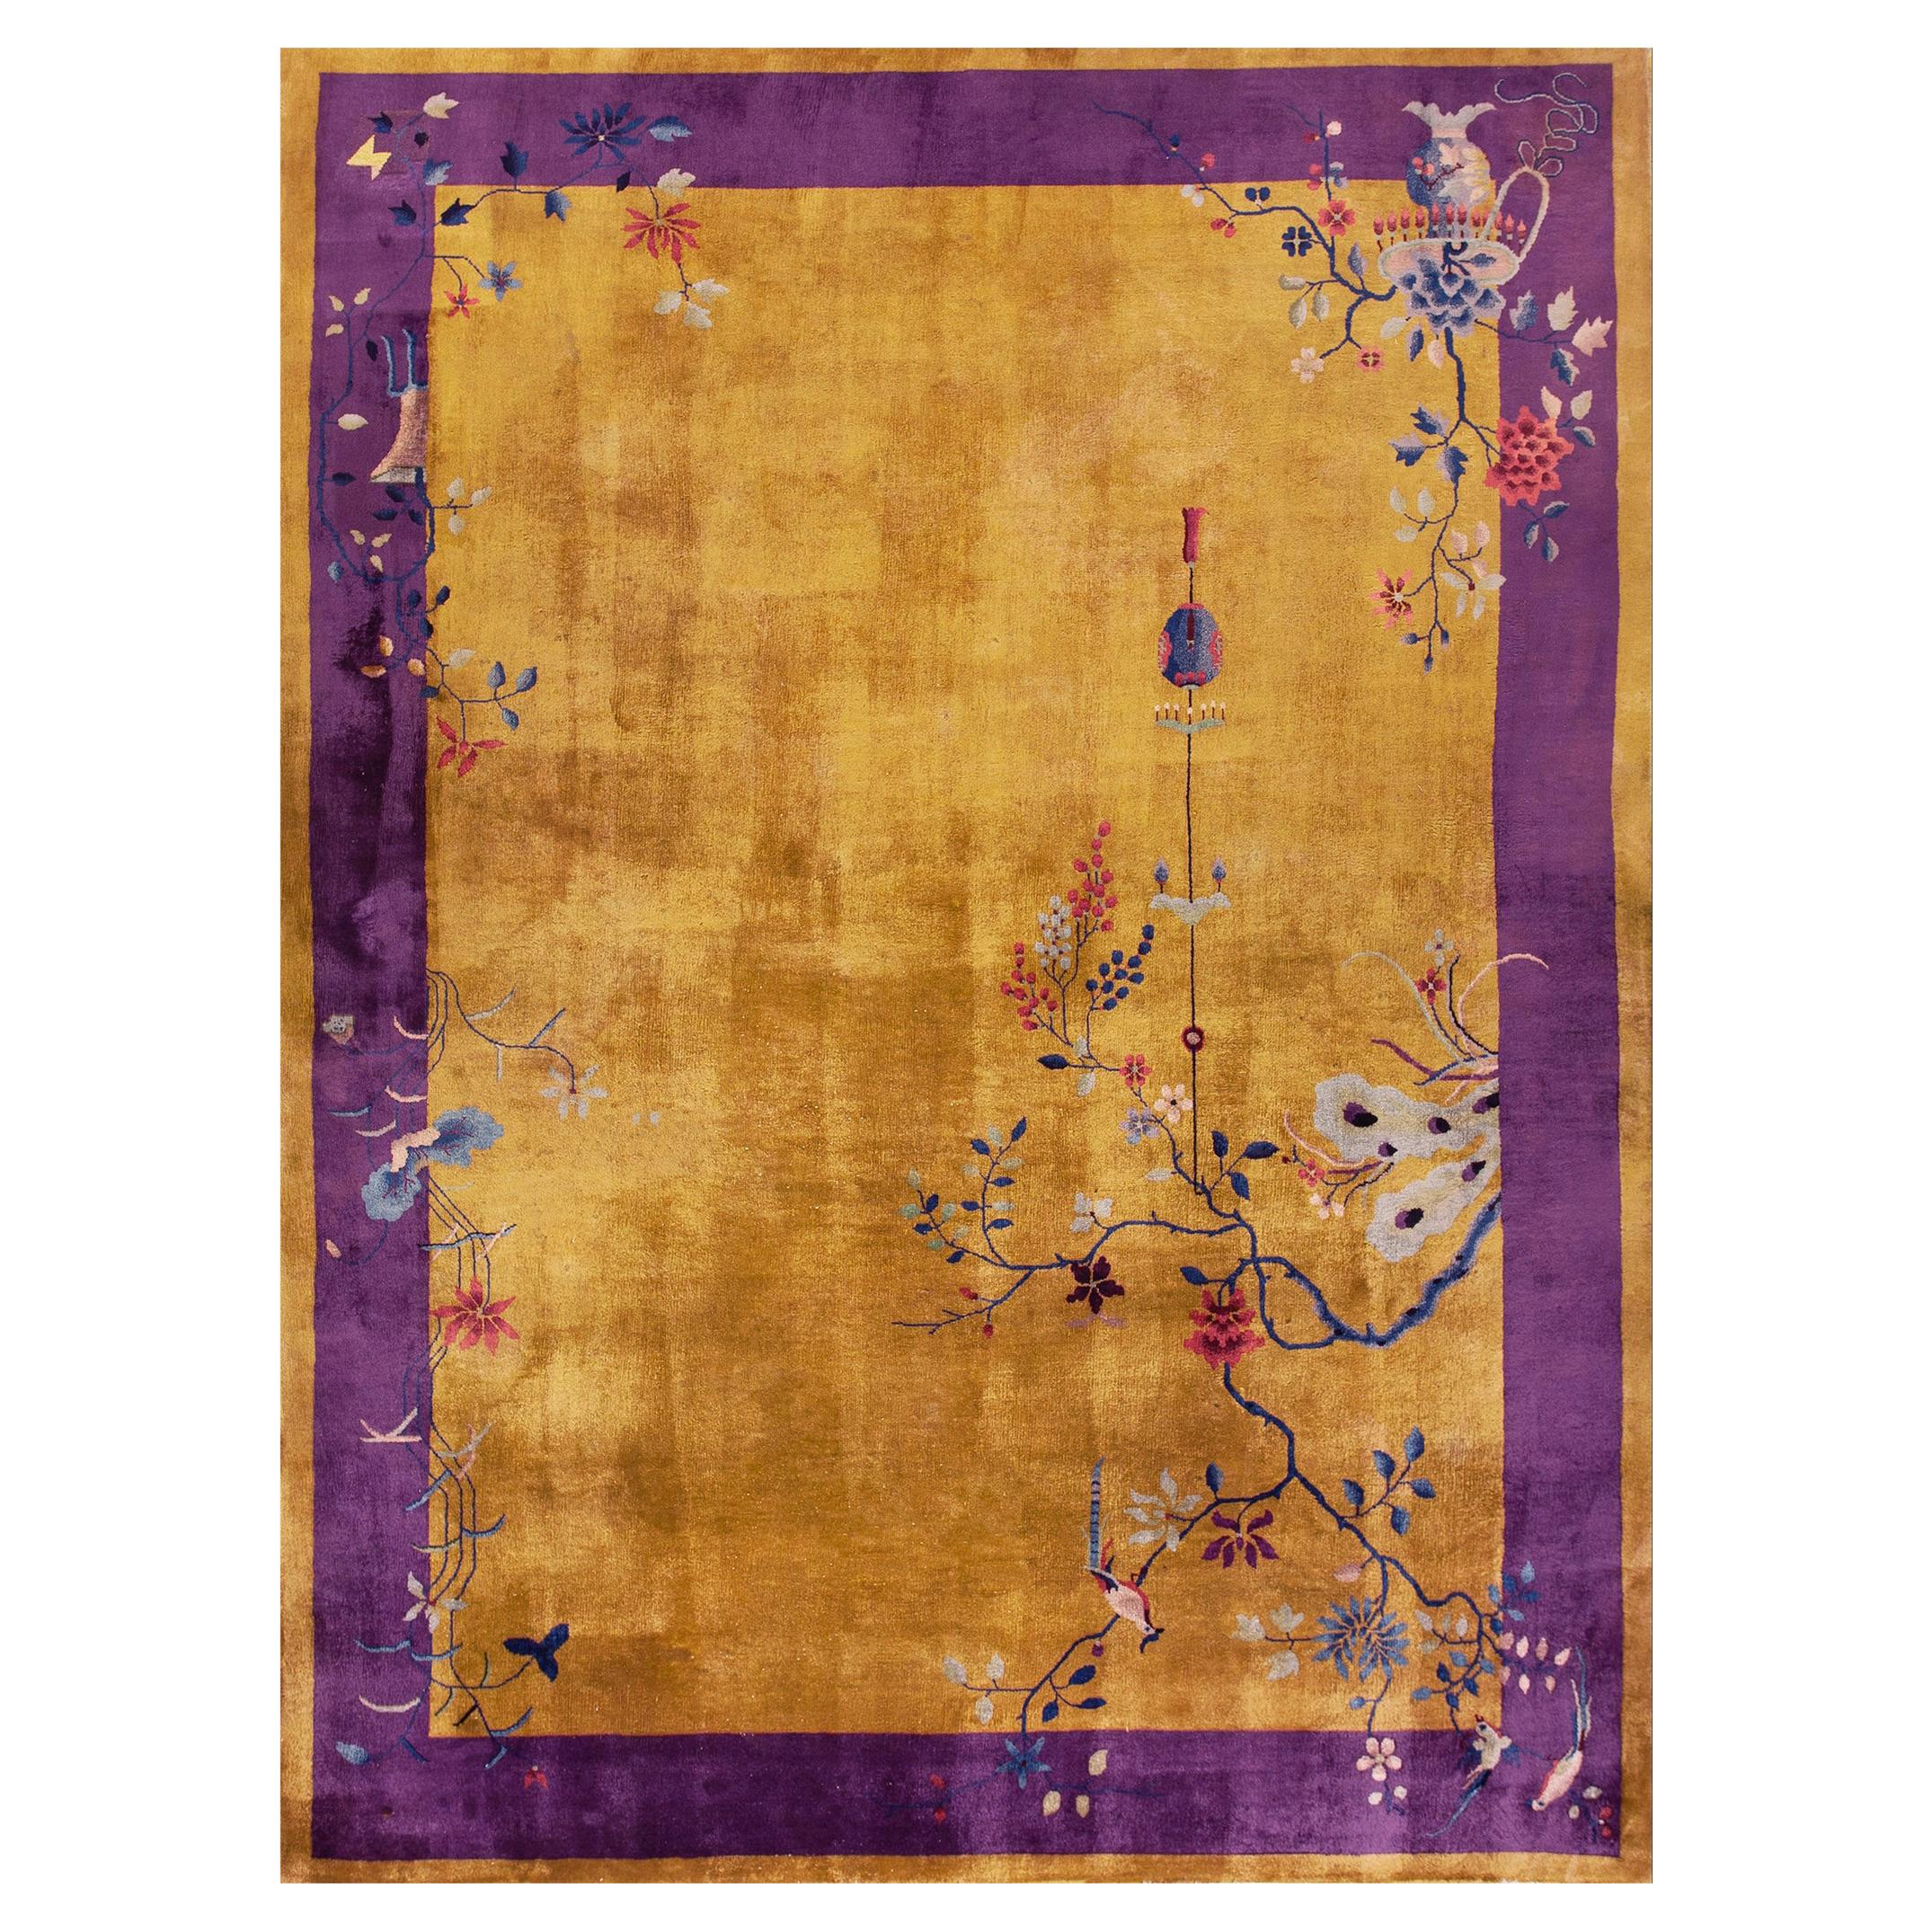 1920s Chinese Art Deco Carpet ( 9' x 11'6" - 275 x 350 cm )